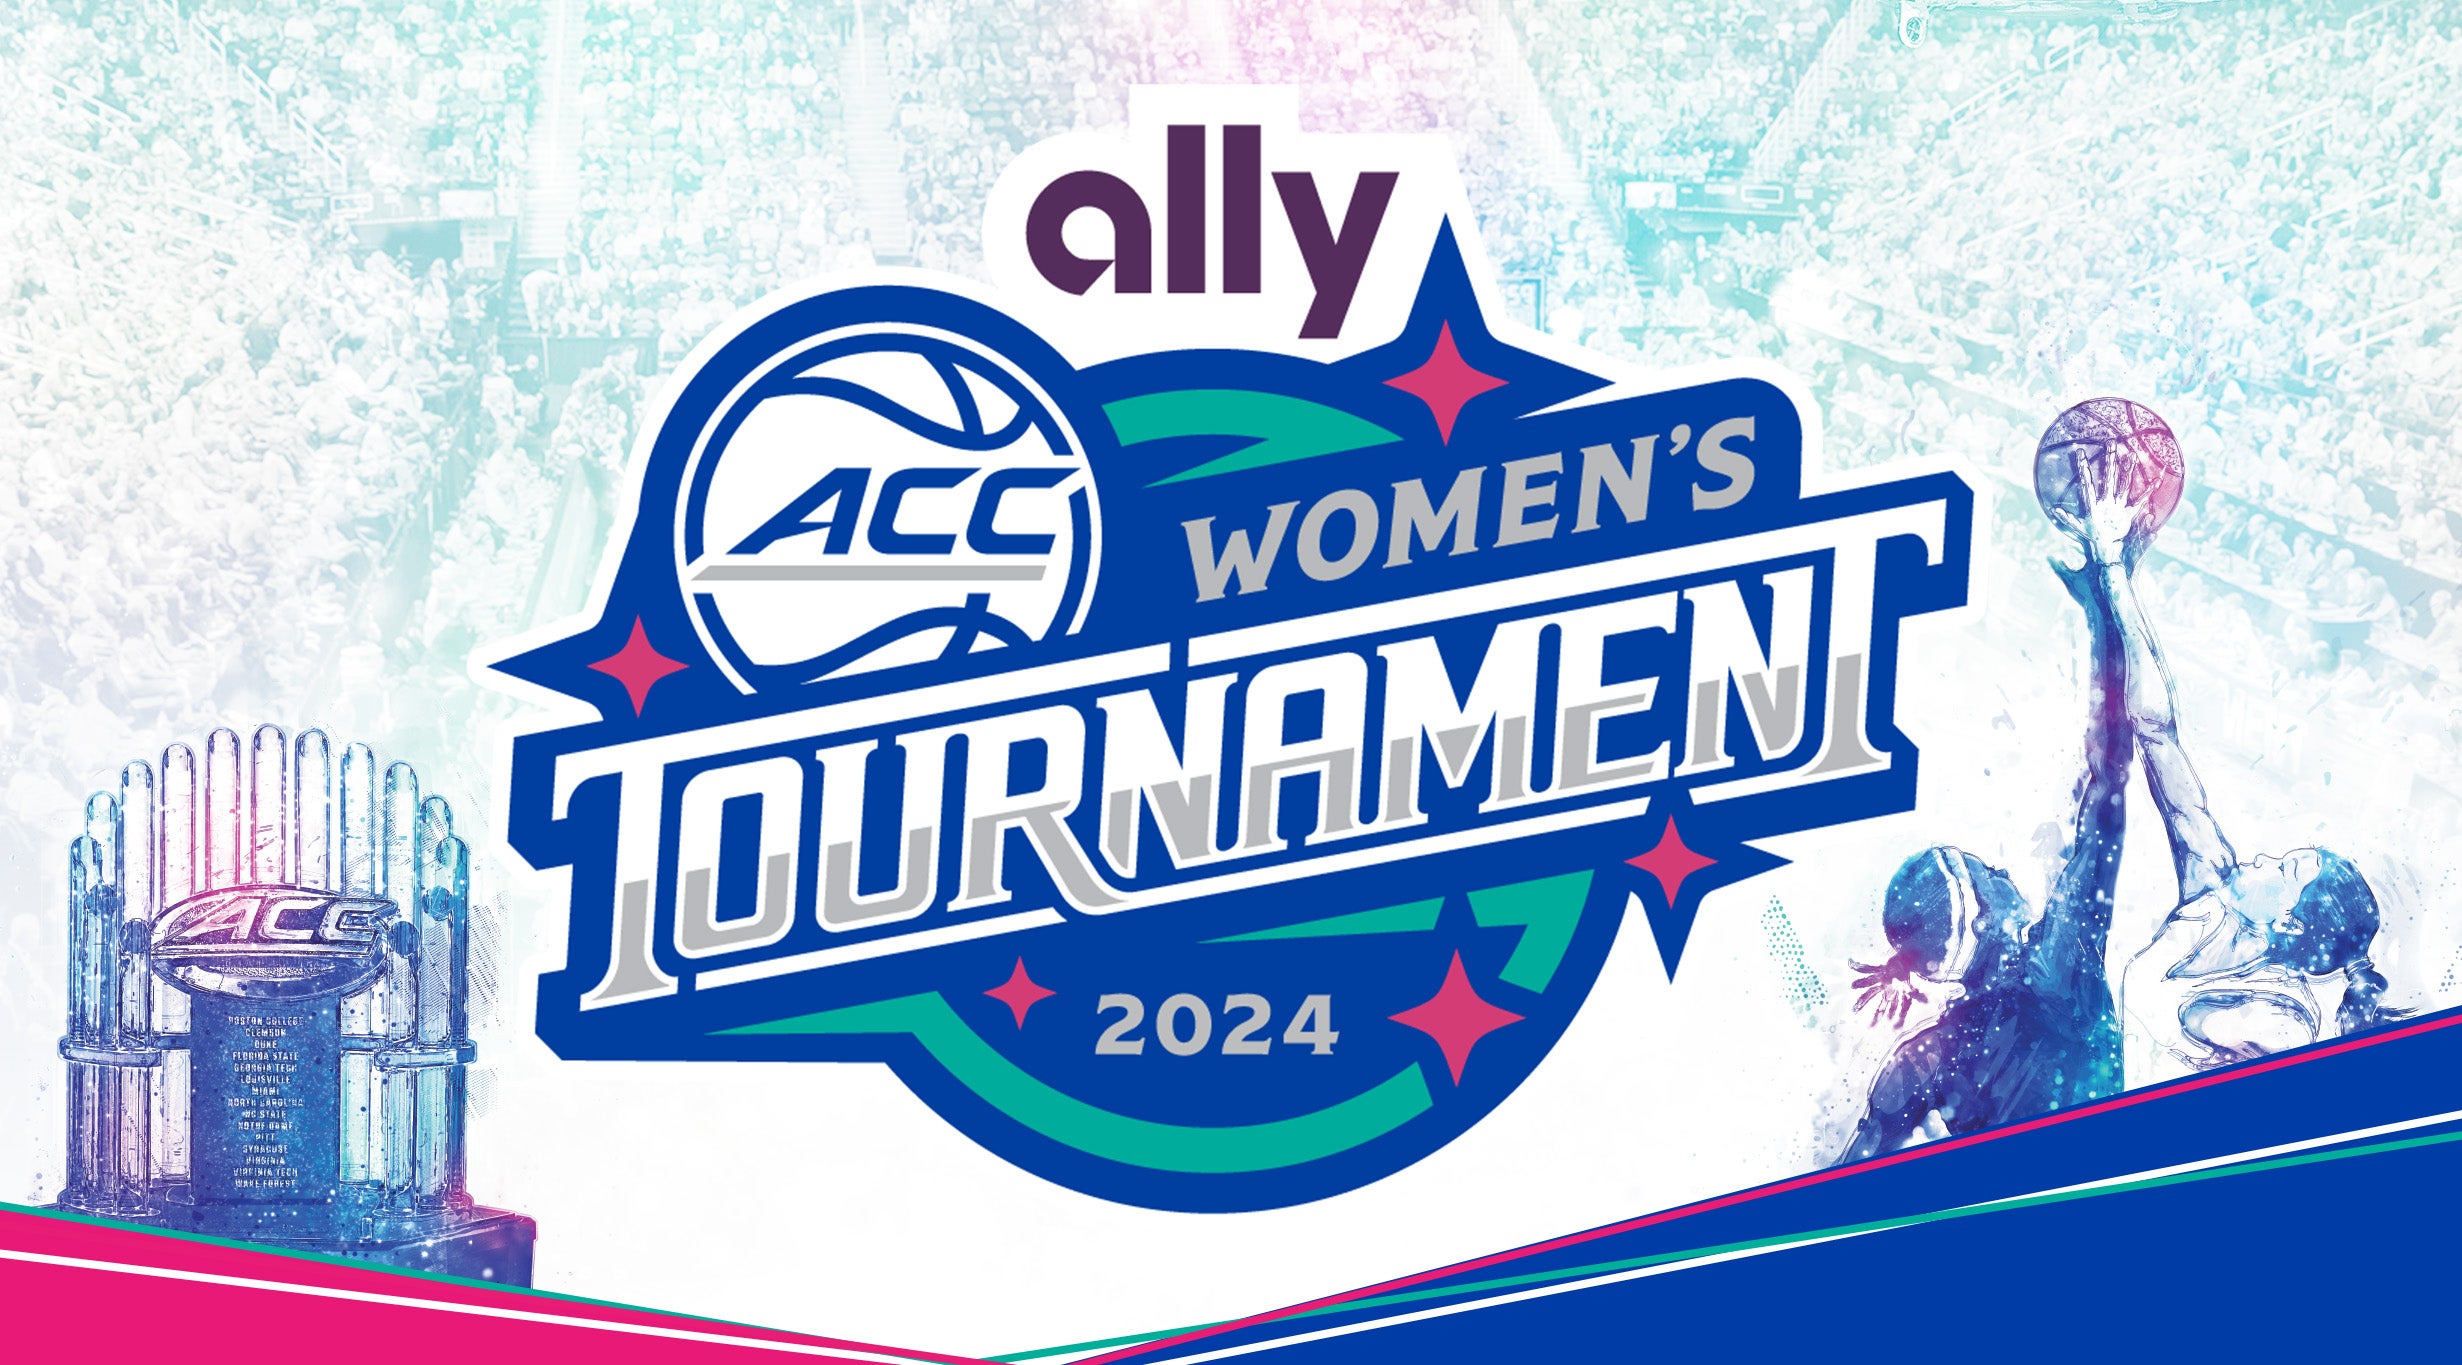 Ally ACC Womens Basketball Tournament Session 2 in Greensboro promo photo for Venue presale offer code